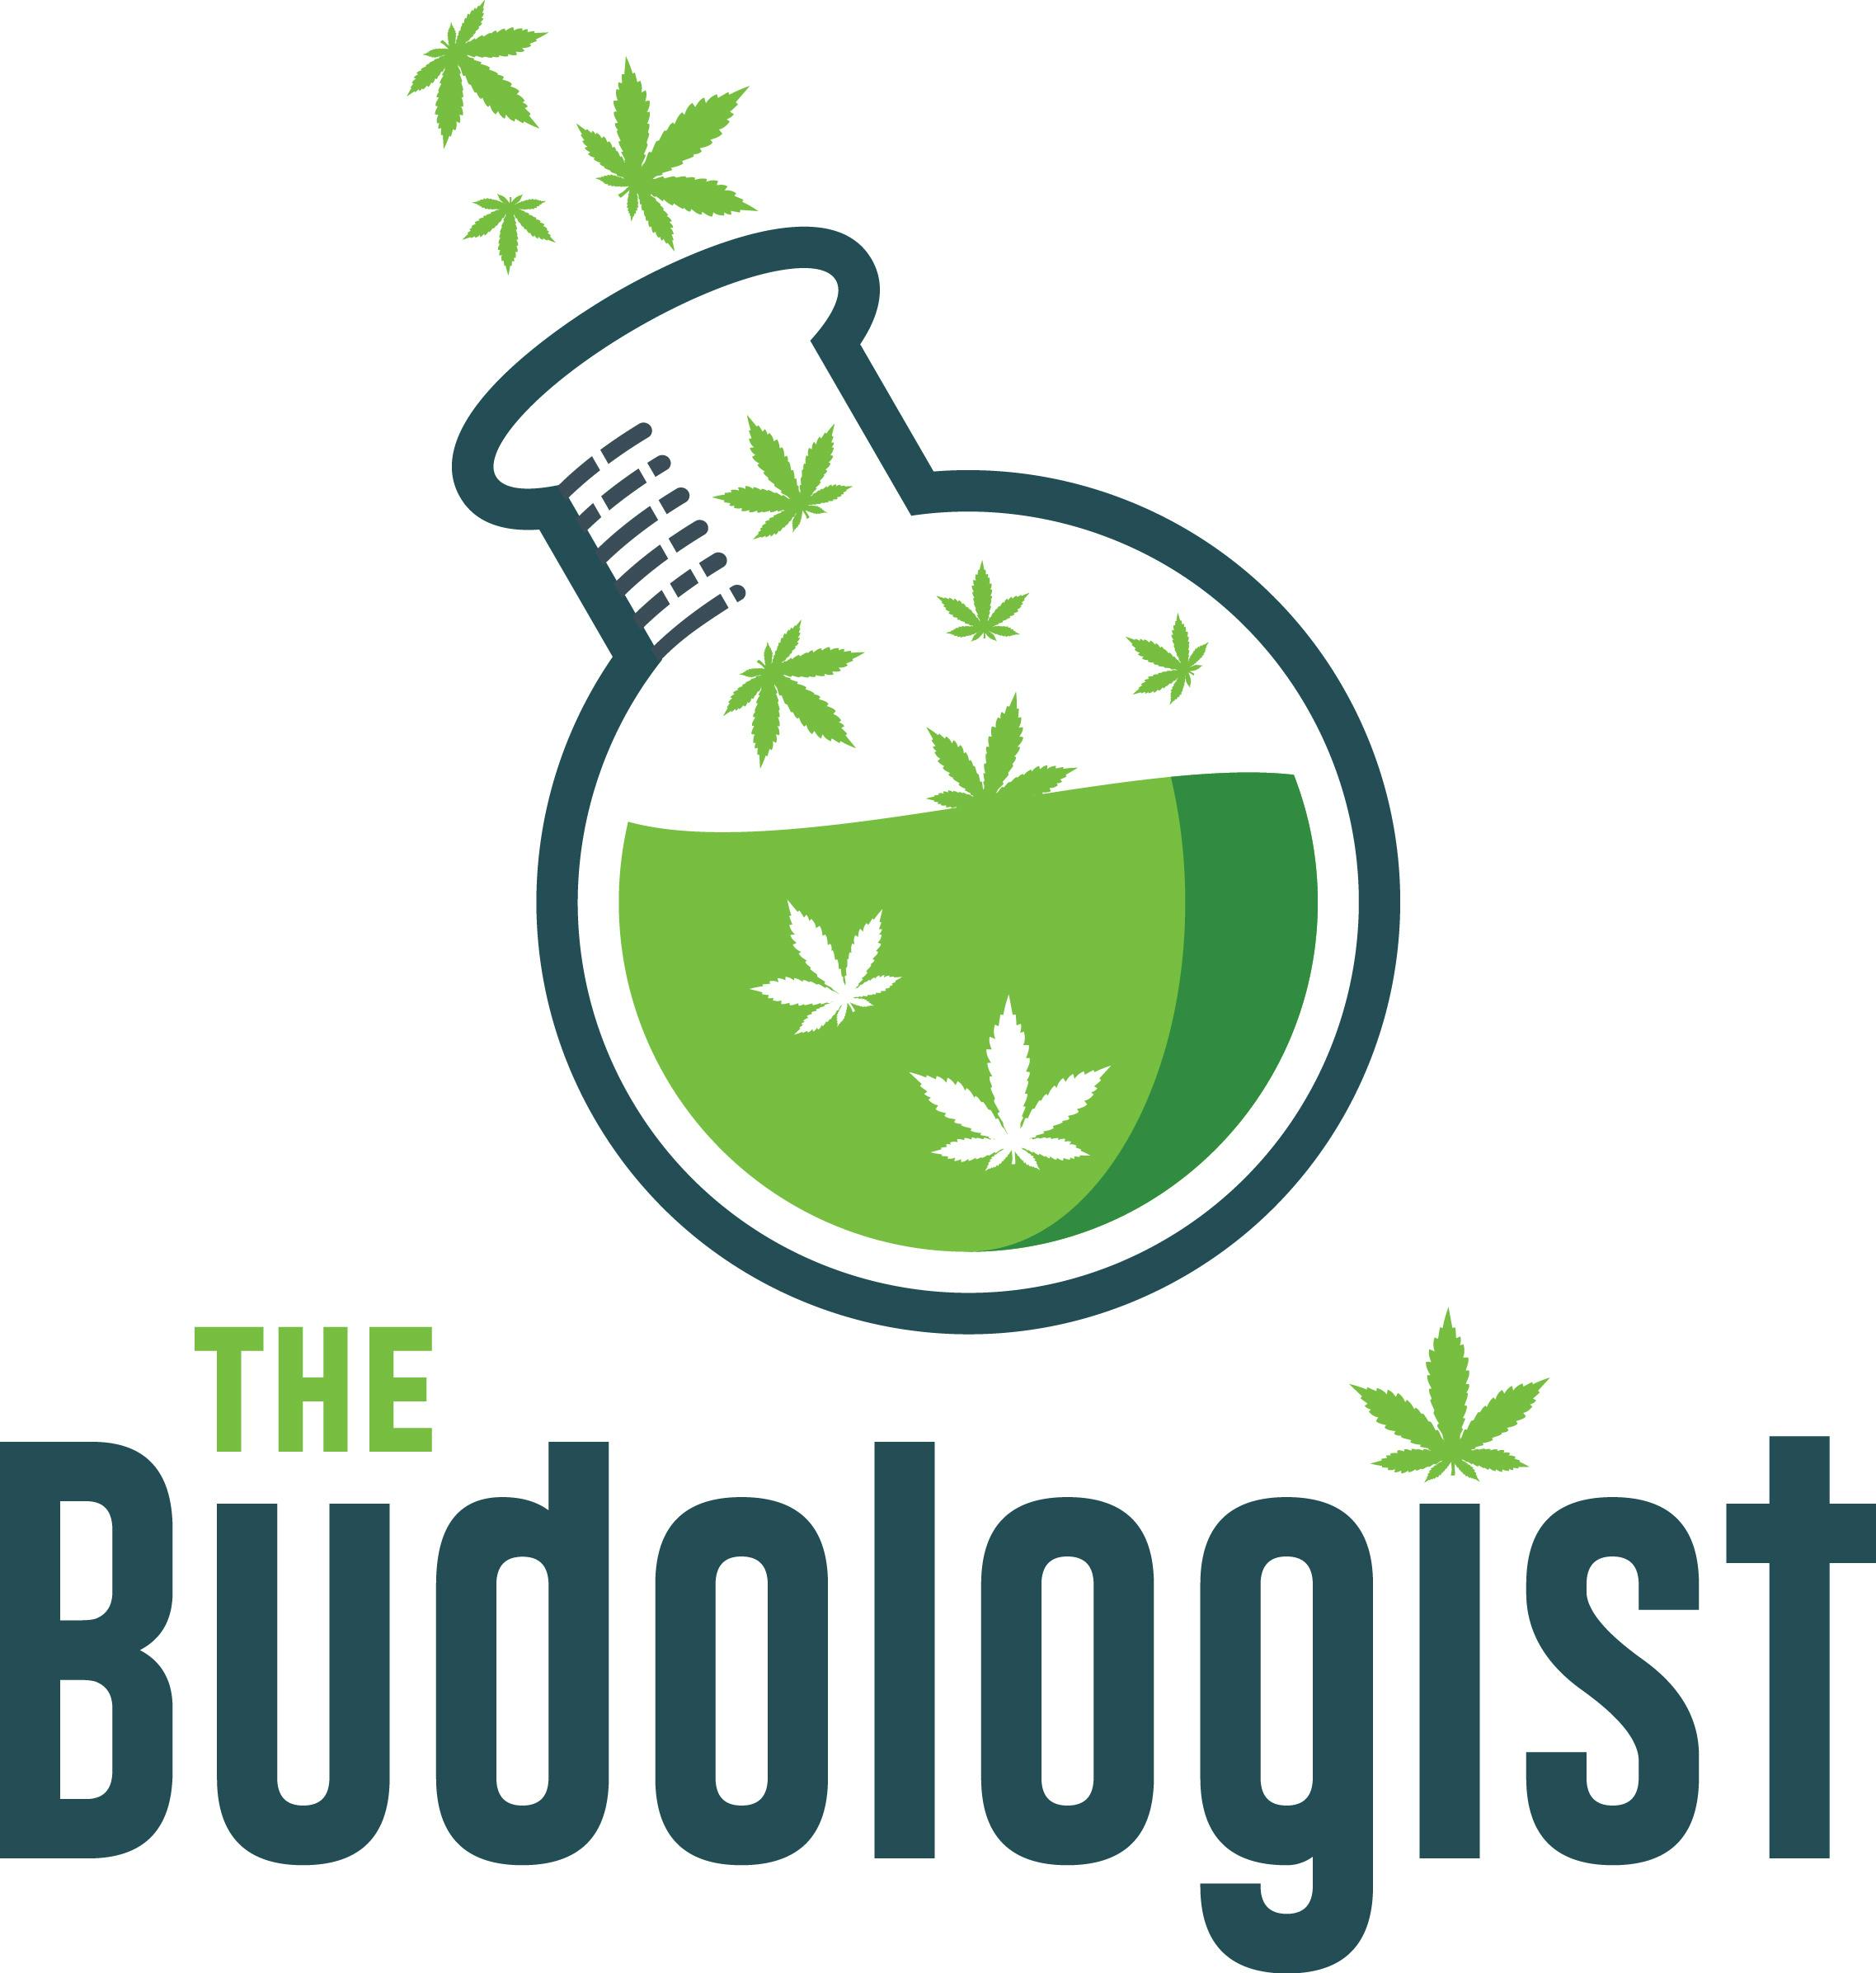 The Budologist logo